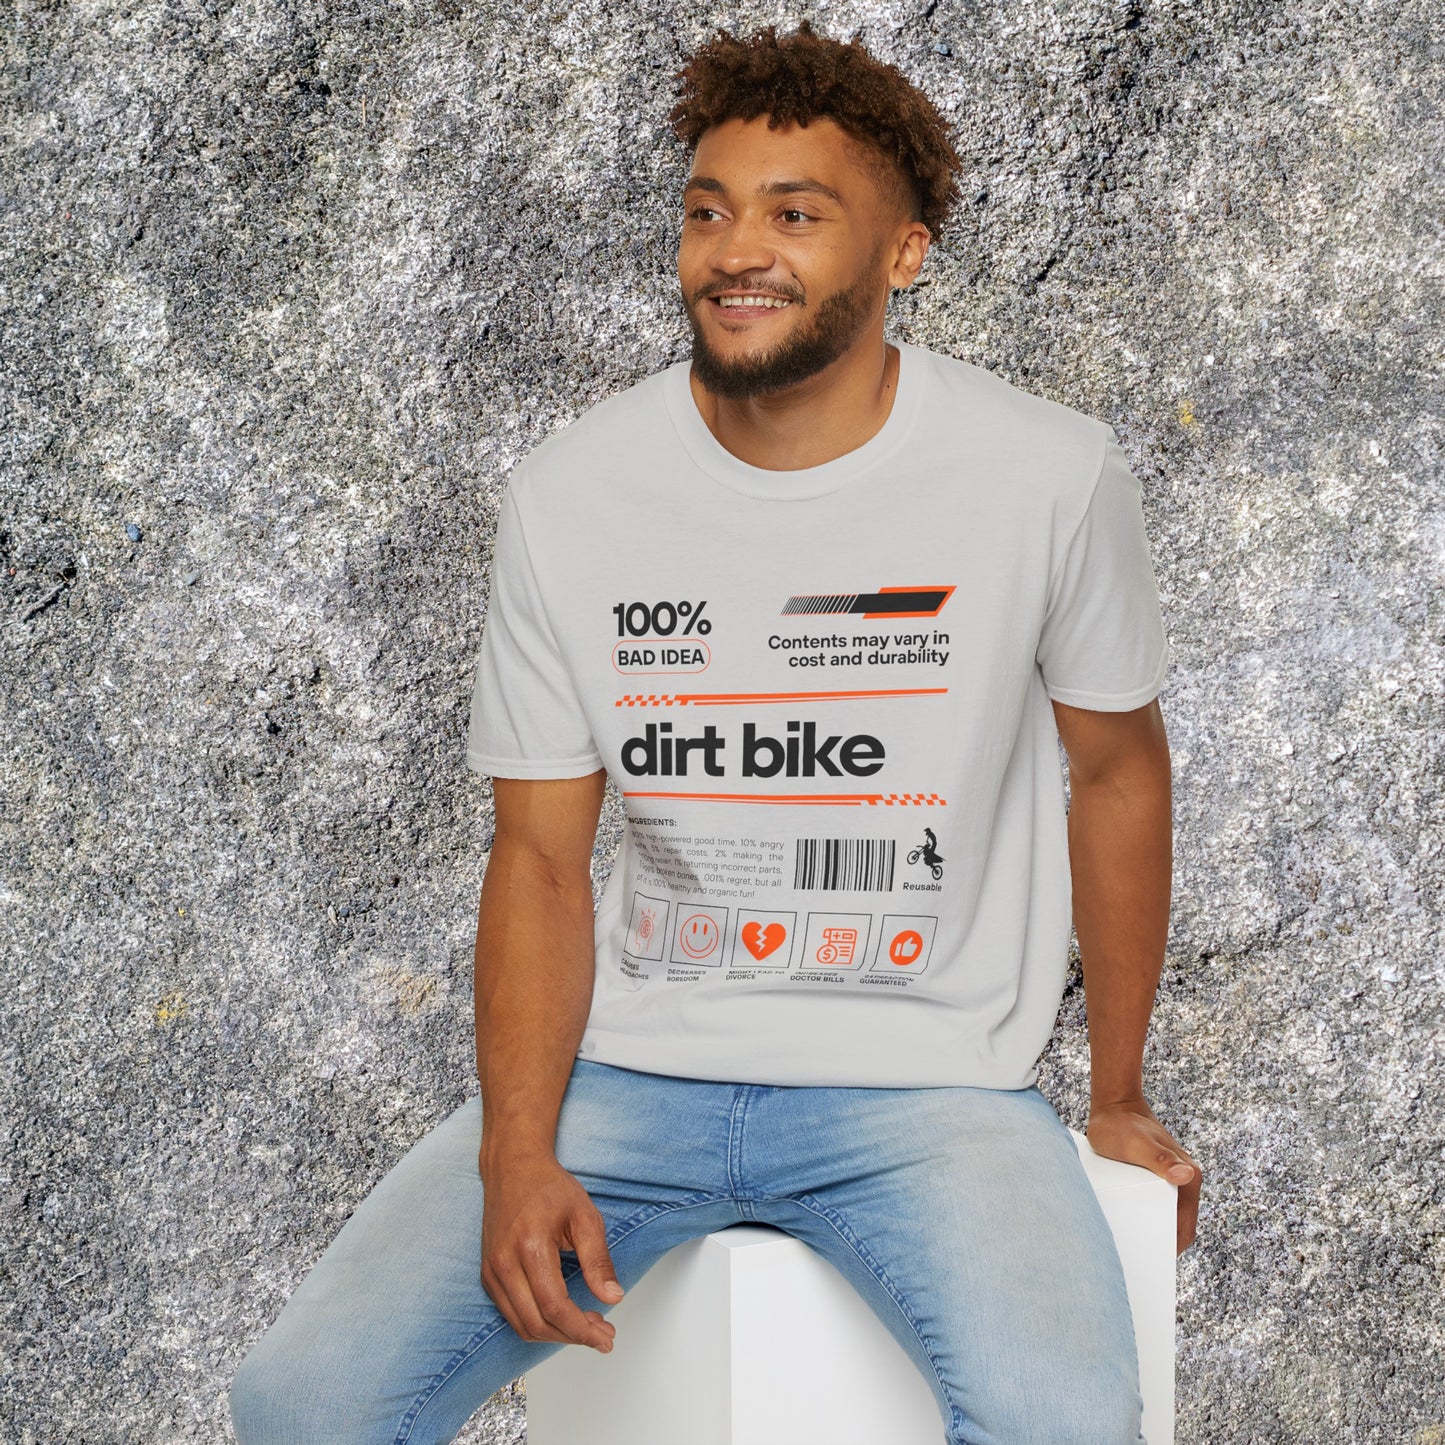 Mens Dirtbike Riding Shirt | Dirt Bike Ingredients Shirt | SOFT Cotton Adult Unisex tee shirt | DirtBike racing shirt for men | Dirt Bike shirt for Boys | DirtBike Ingredient List 100% Bad Idea